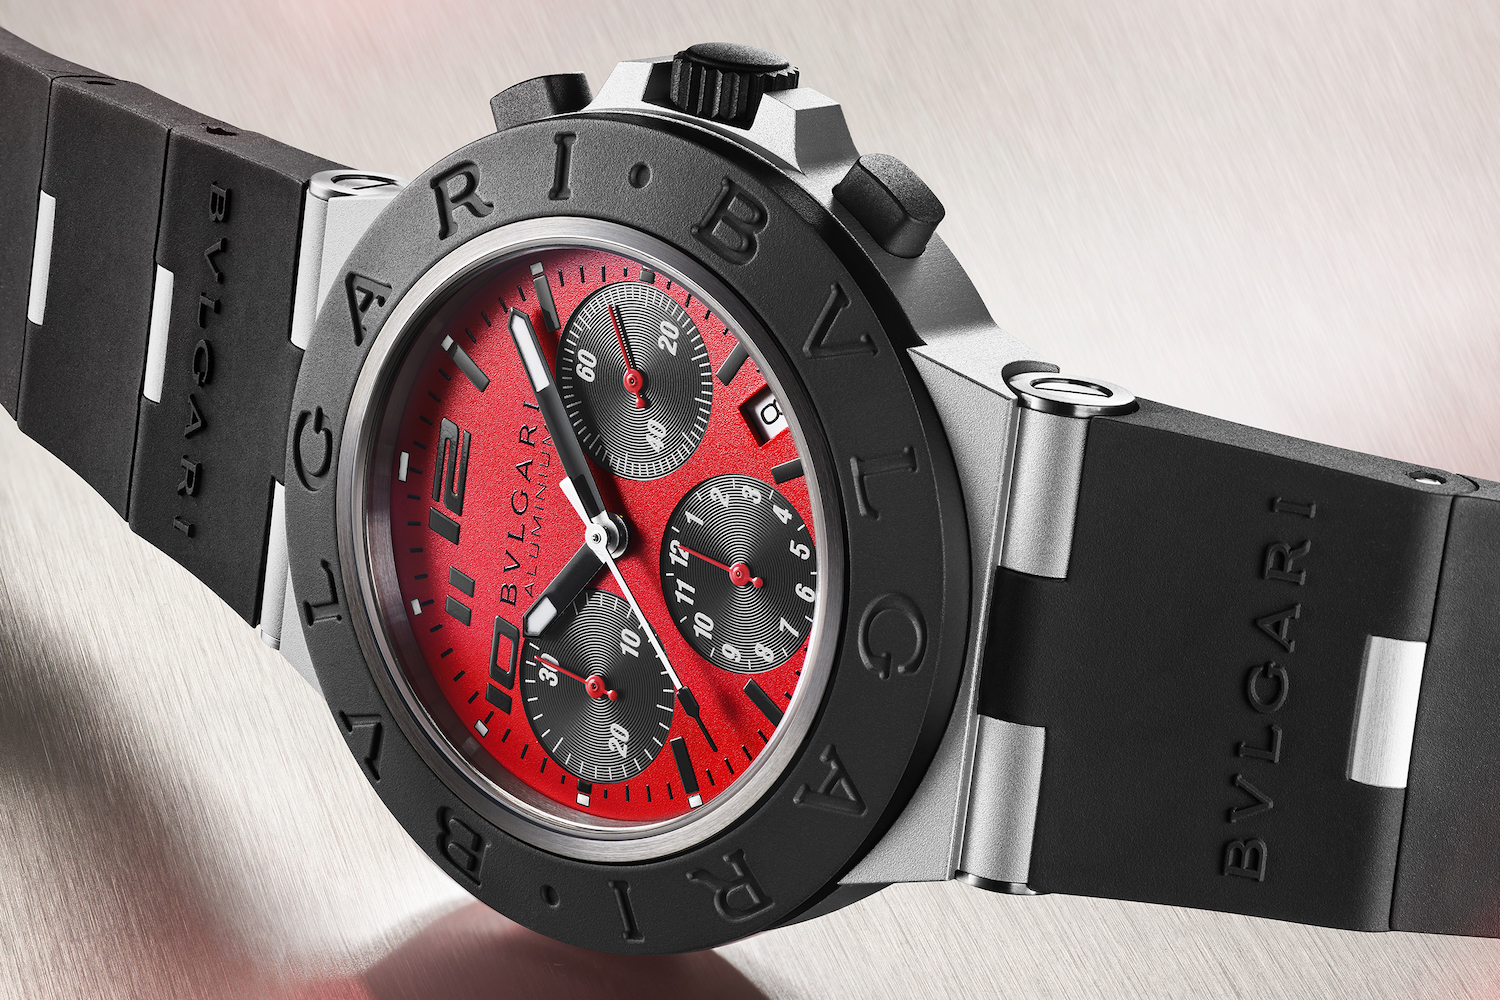 Bulgari Release Their Sportiest Watch Yet With Famous Italian Motorbike Brand